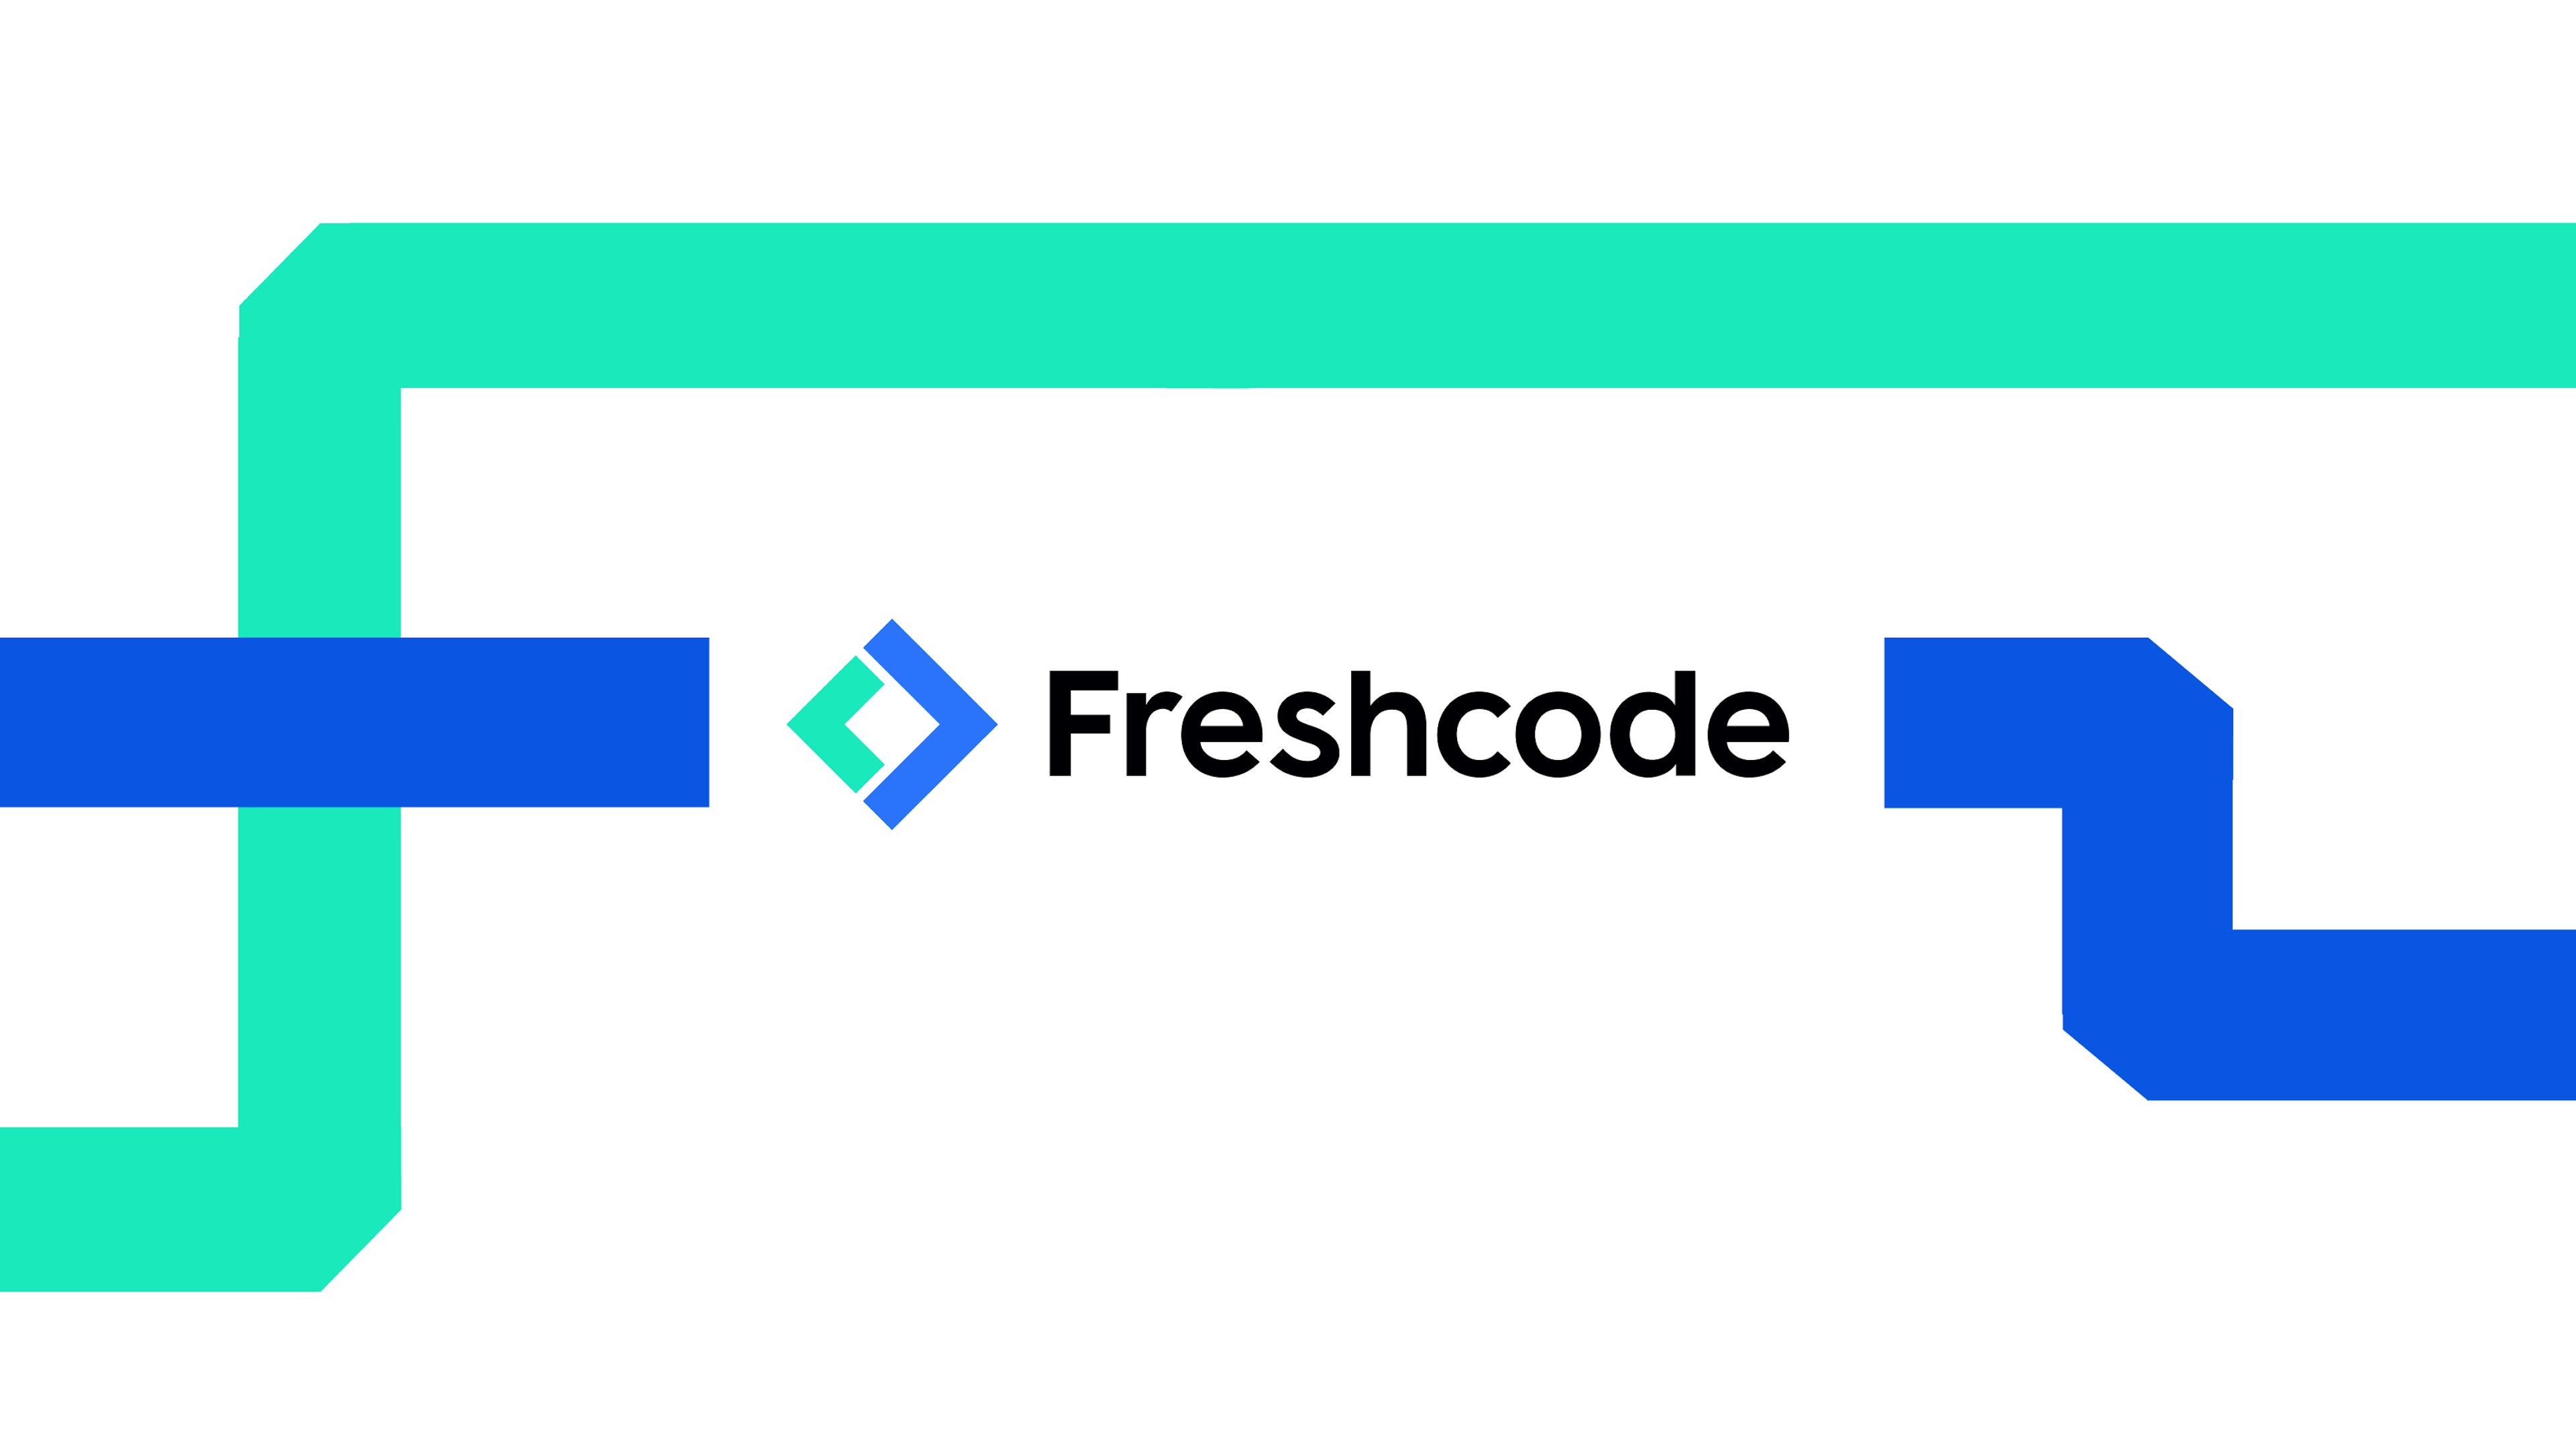 Freshcode Path: Clojure, JS, and Self-Development